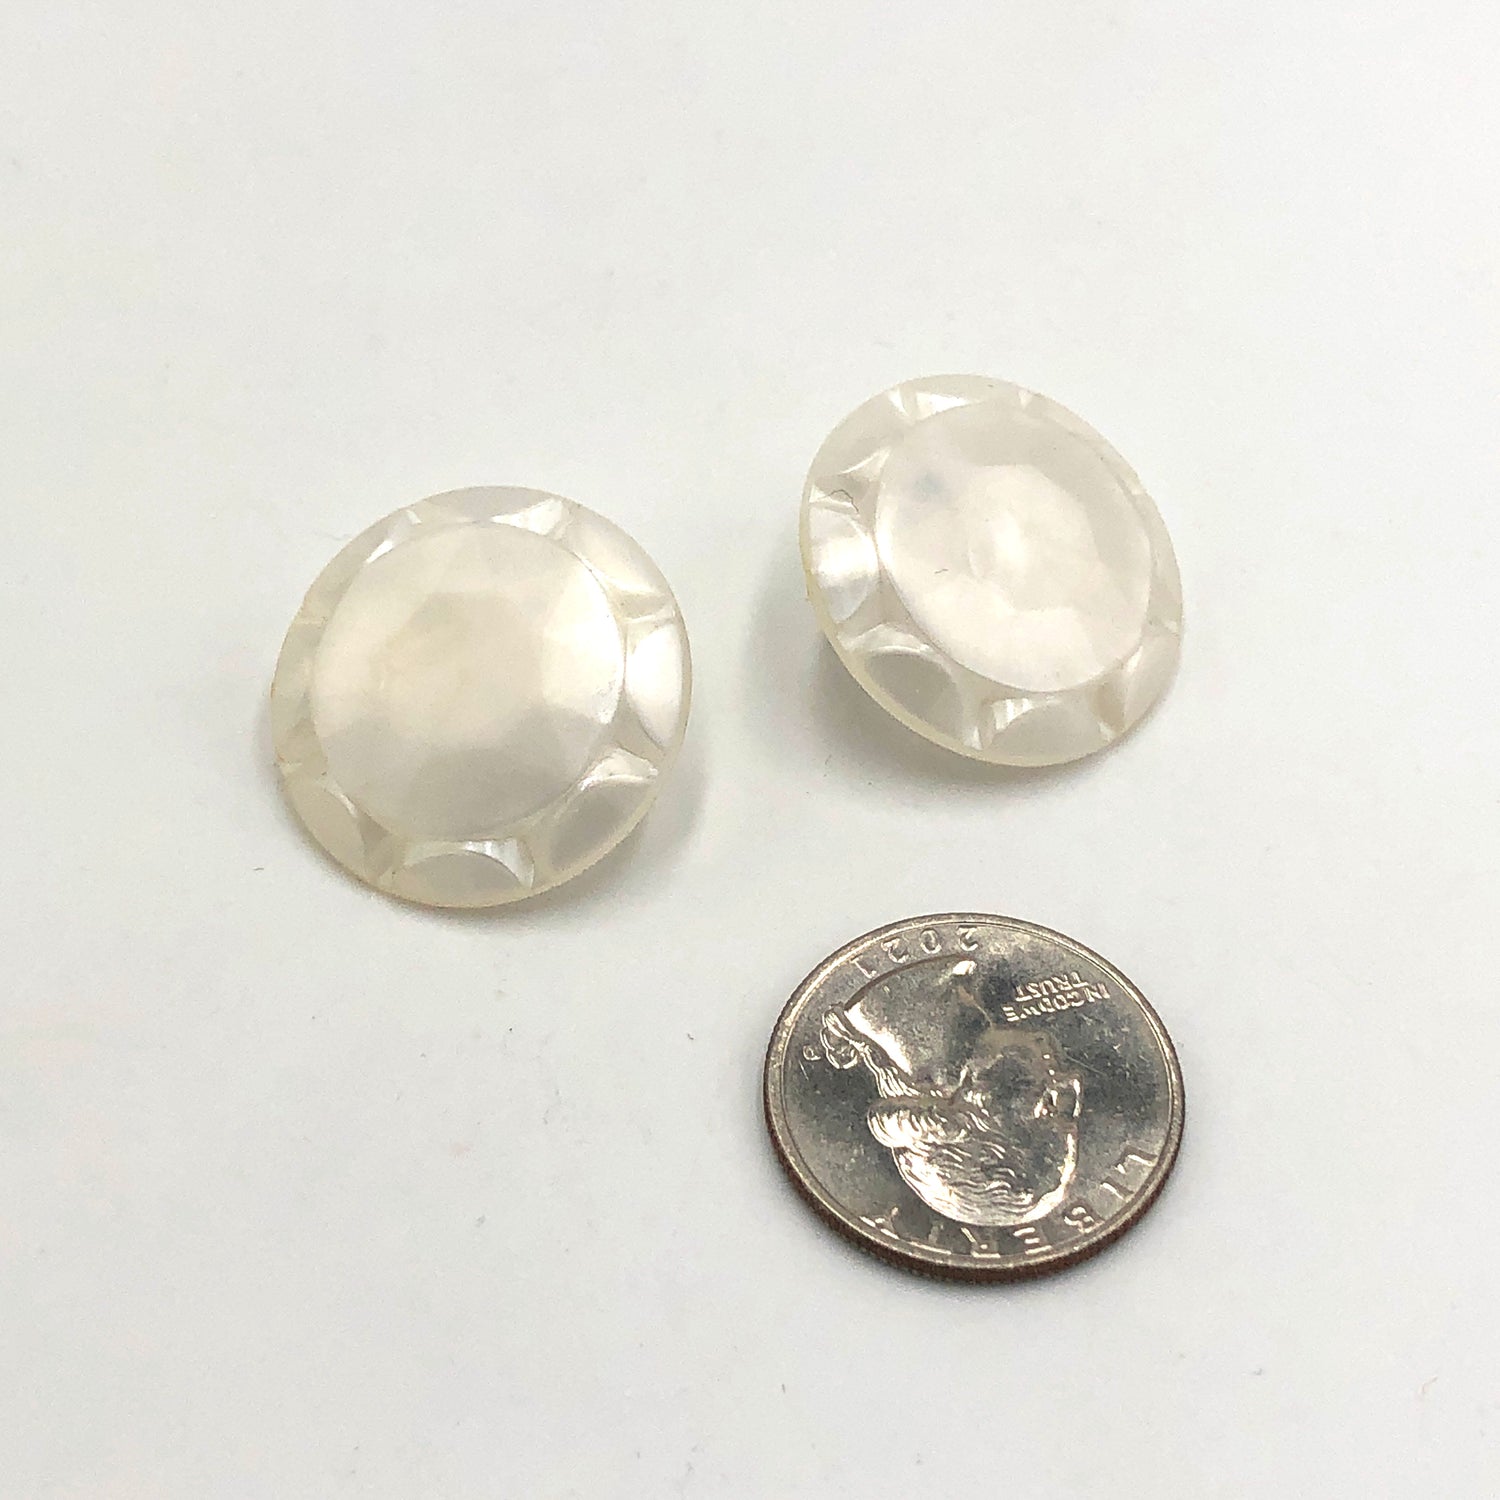 pearl white earrings